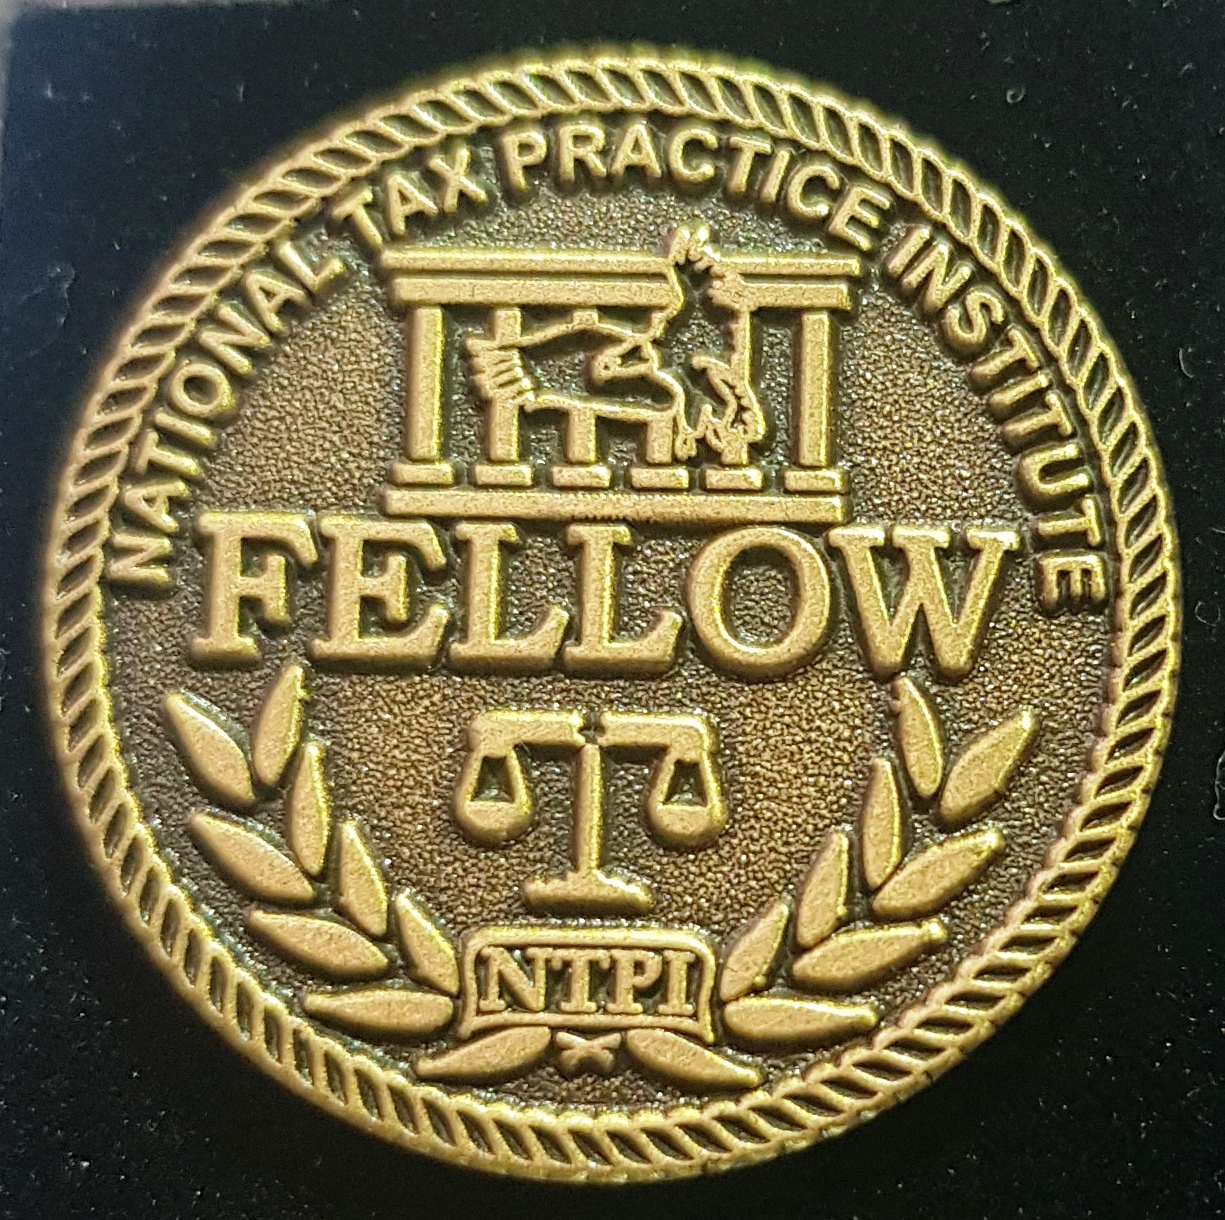 NTPI Fellow badge